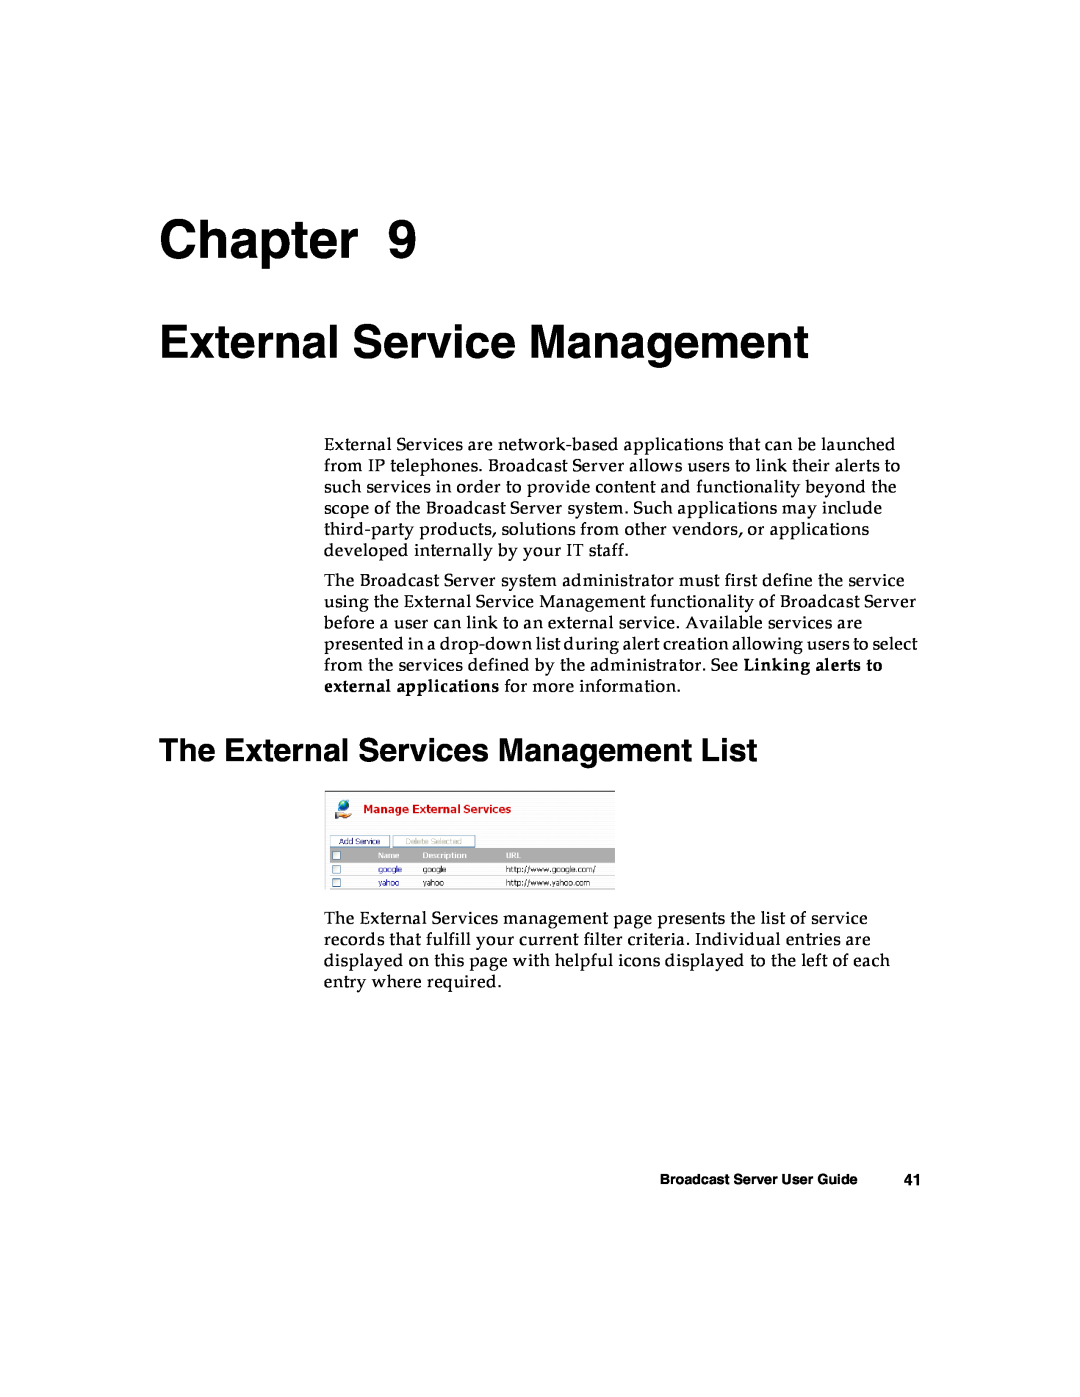 Nortel Networks Broadcast Server warranty External Service Management, The External Services Management List, Chapter 